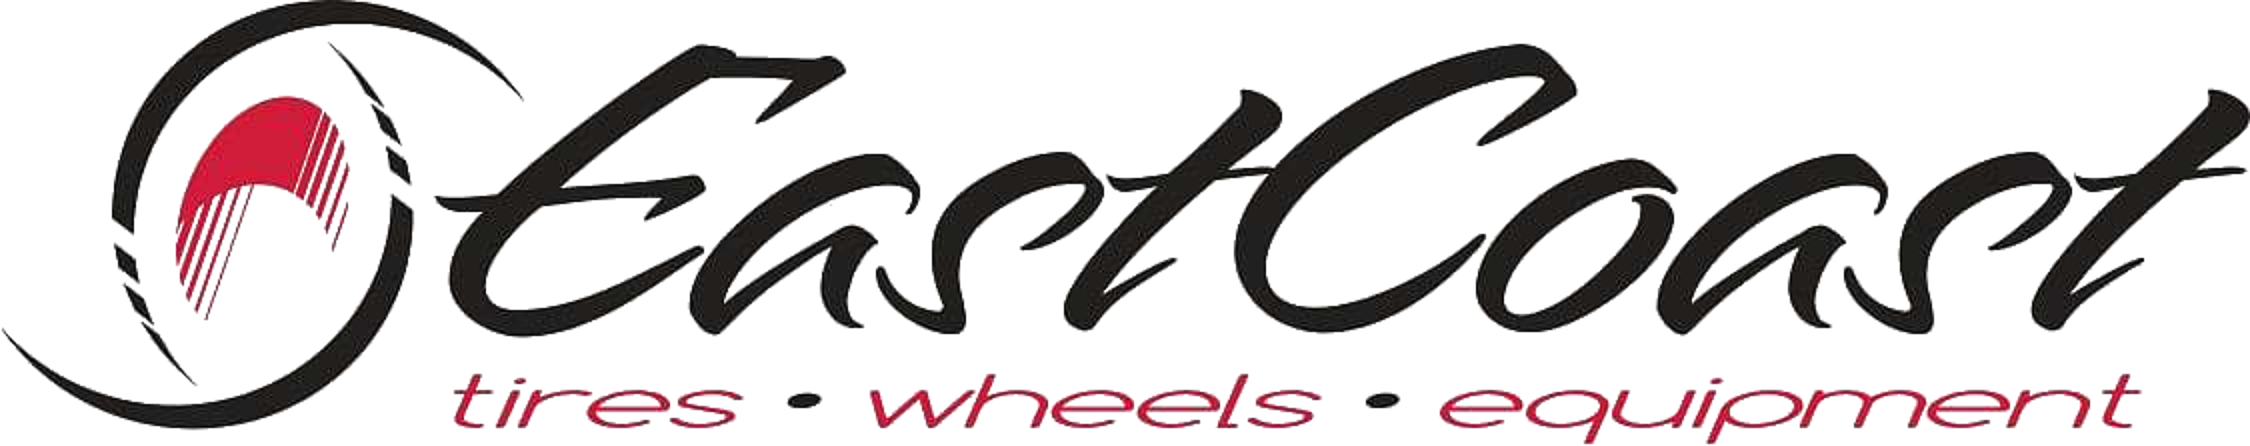 East Coast Tires Wheels Equipment Your Local NC Wheel Tire 